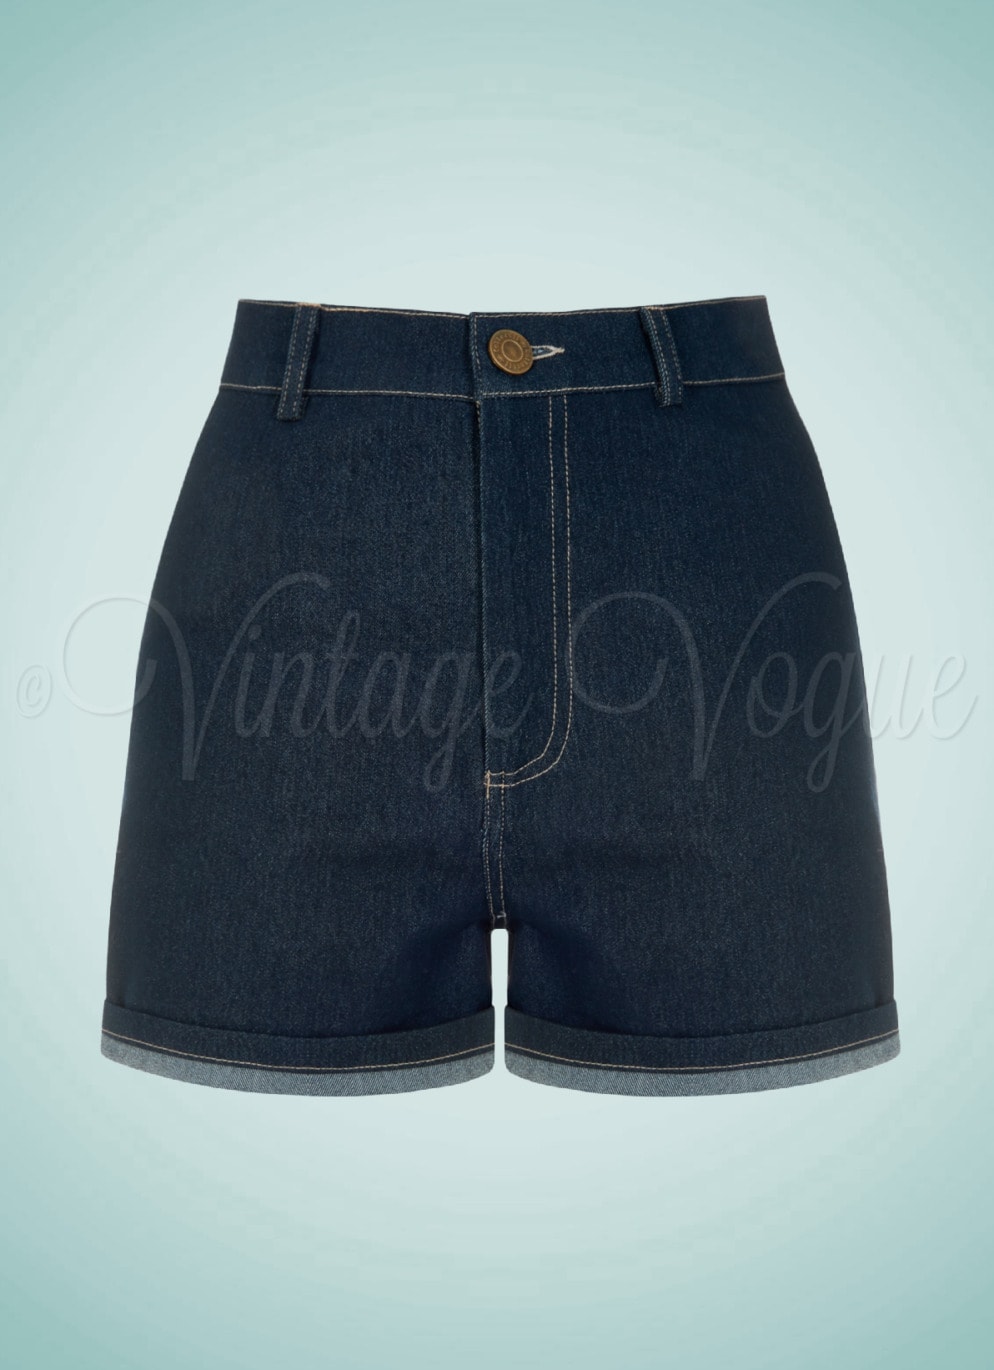 Collectif 50er Jahre High Waist Rockabilly Jeans Shorts Lily Shorts in Denim Dunkelblau